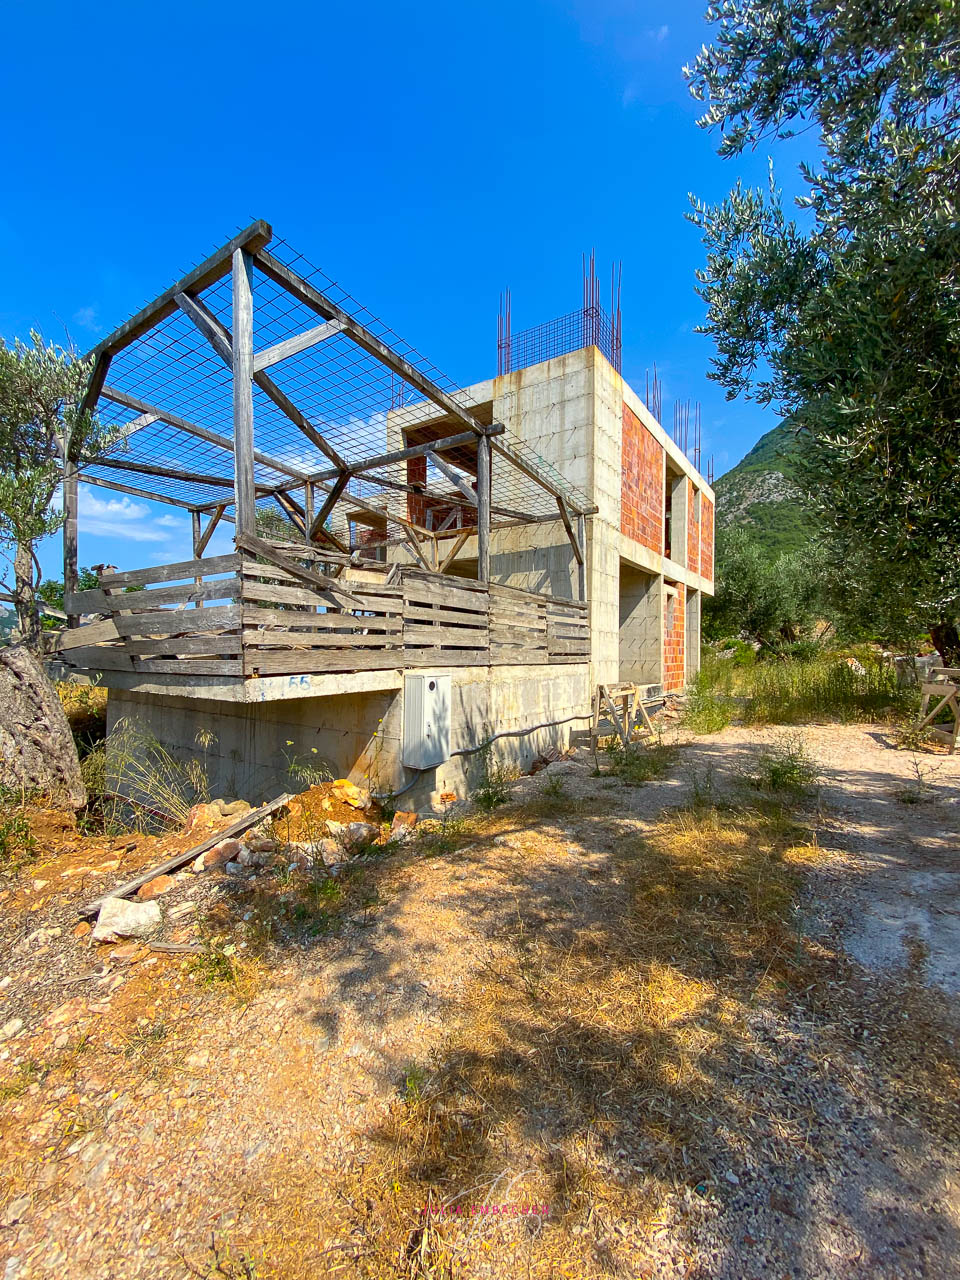 Immo Monte Immobilien in Montenegro